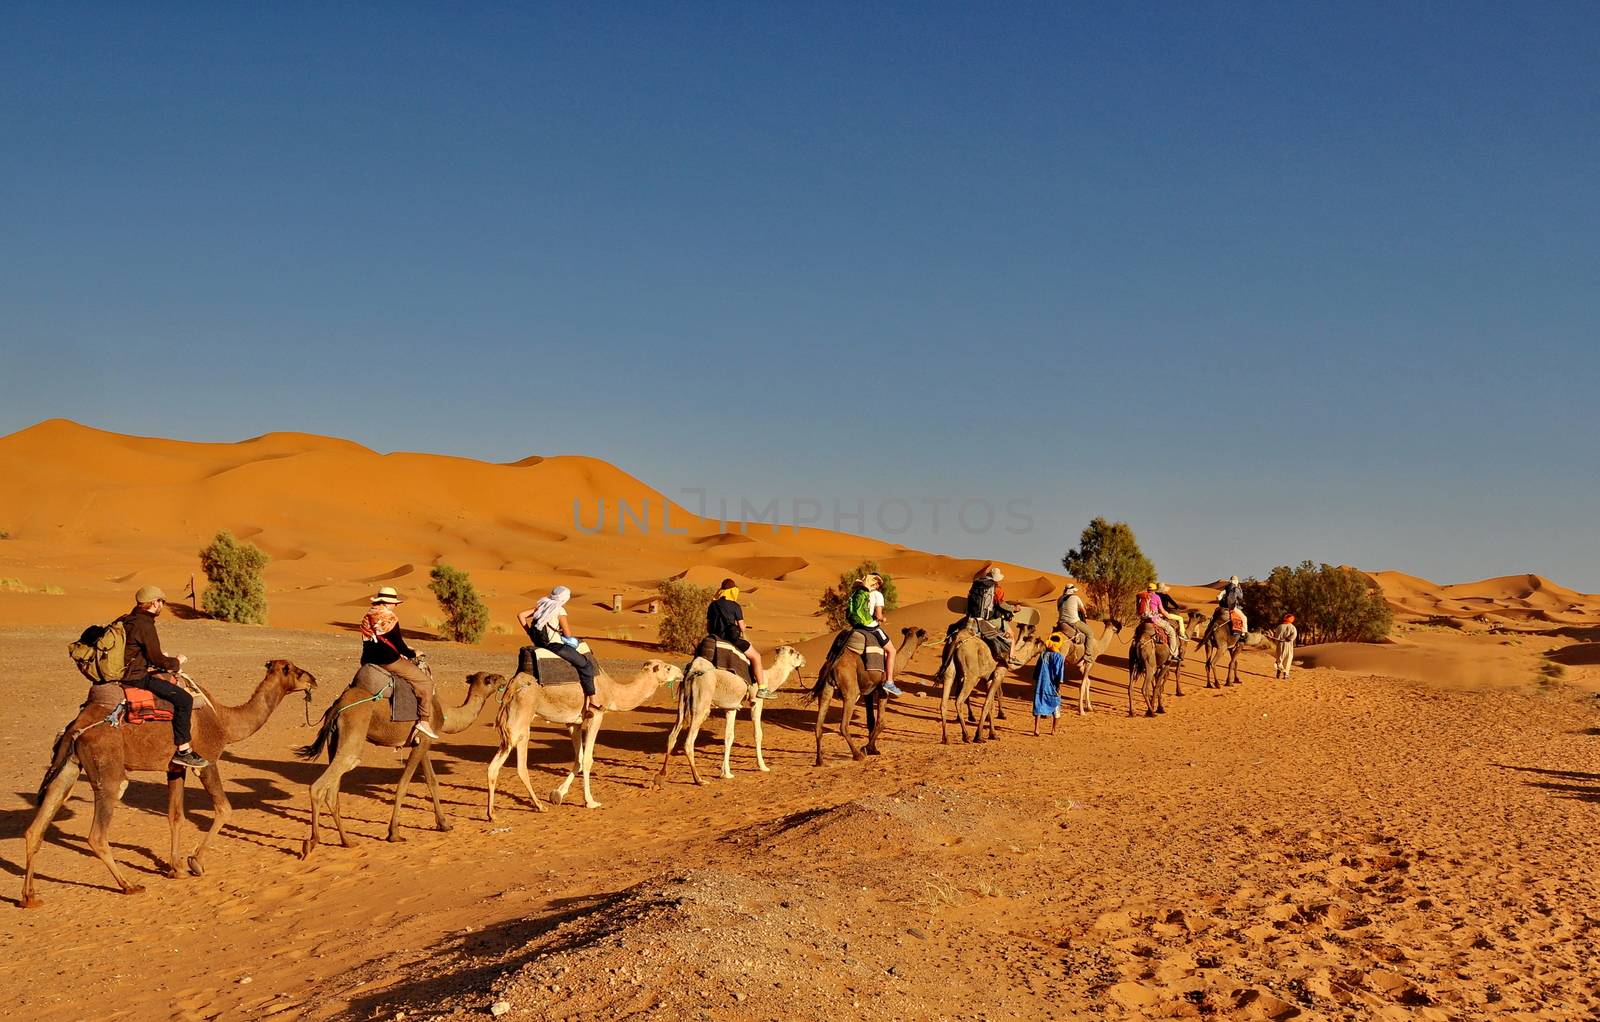 MERZOUGA DESERT - OCTOBER 01: Tourists in a Camel caravan in Merzouga Desert, Morocco on October 01, 2013.